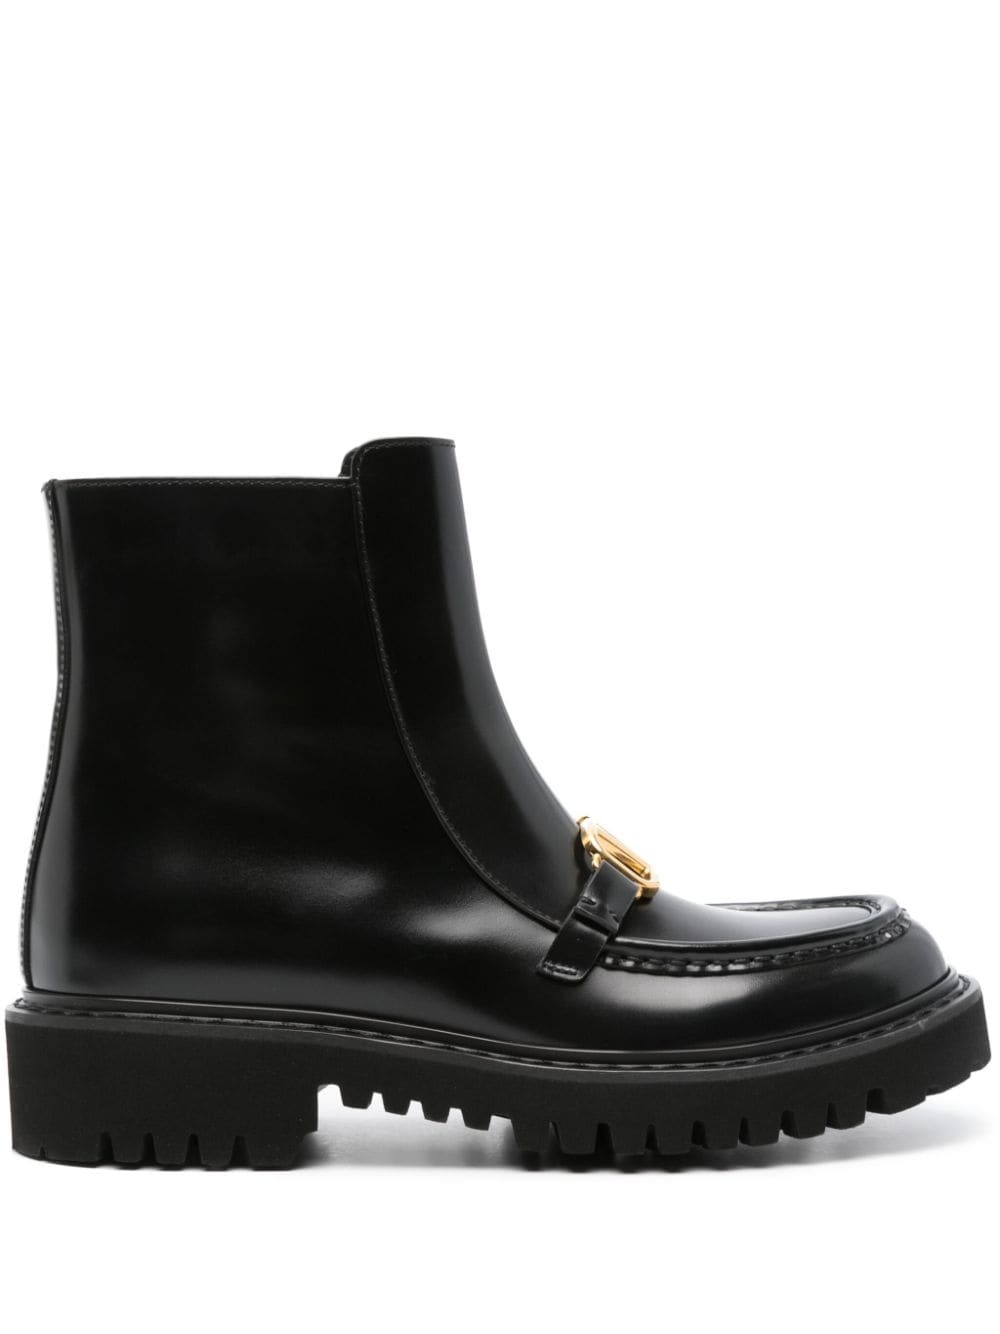 VLogo leather flat boots - 1